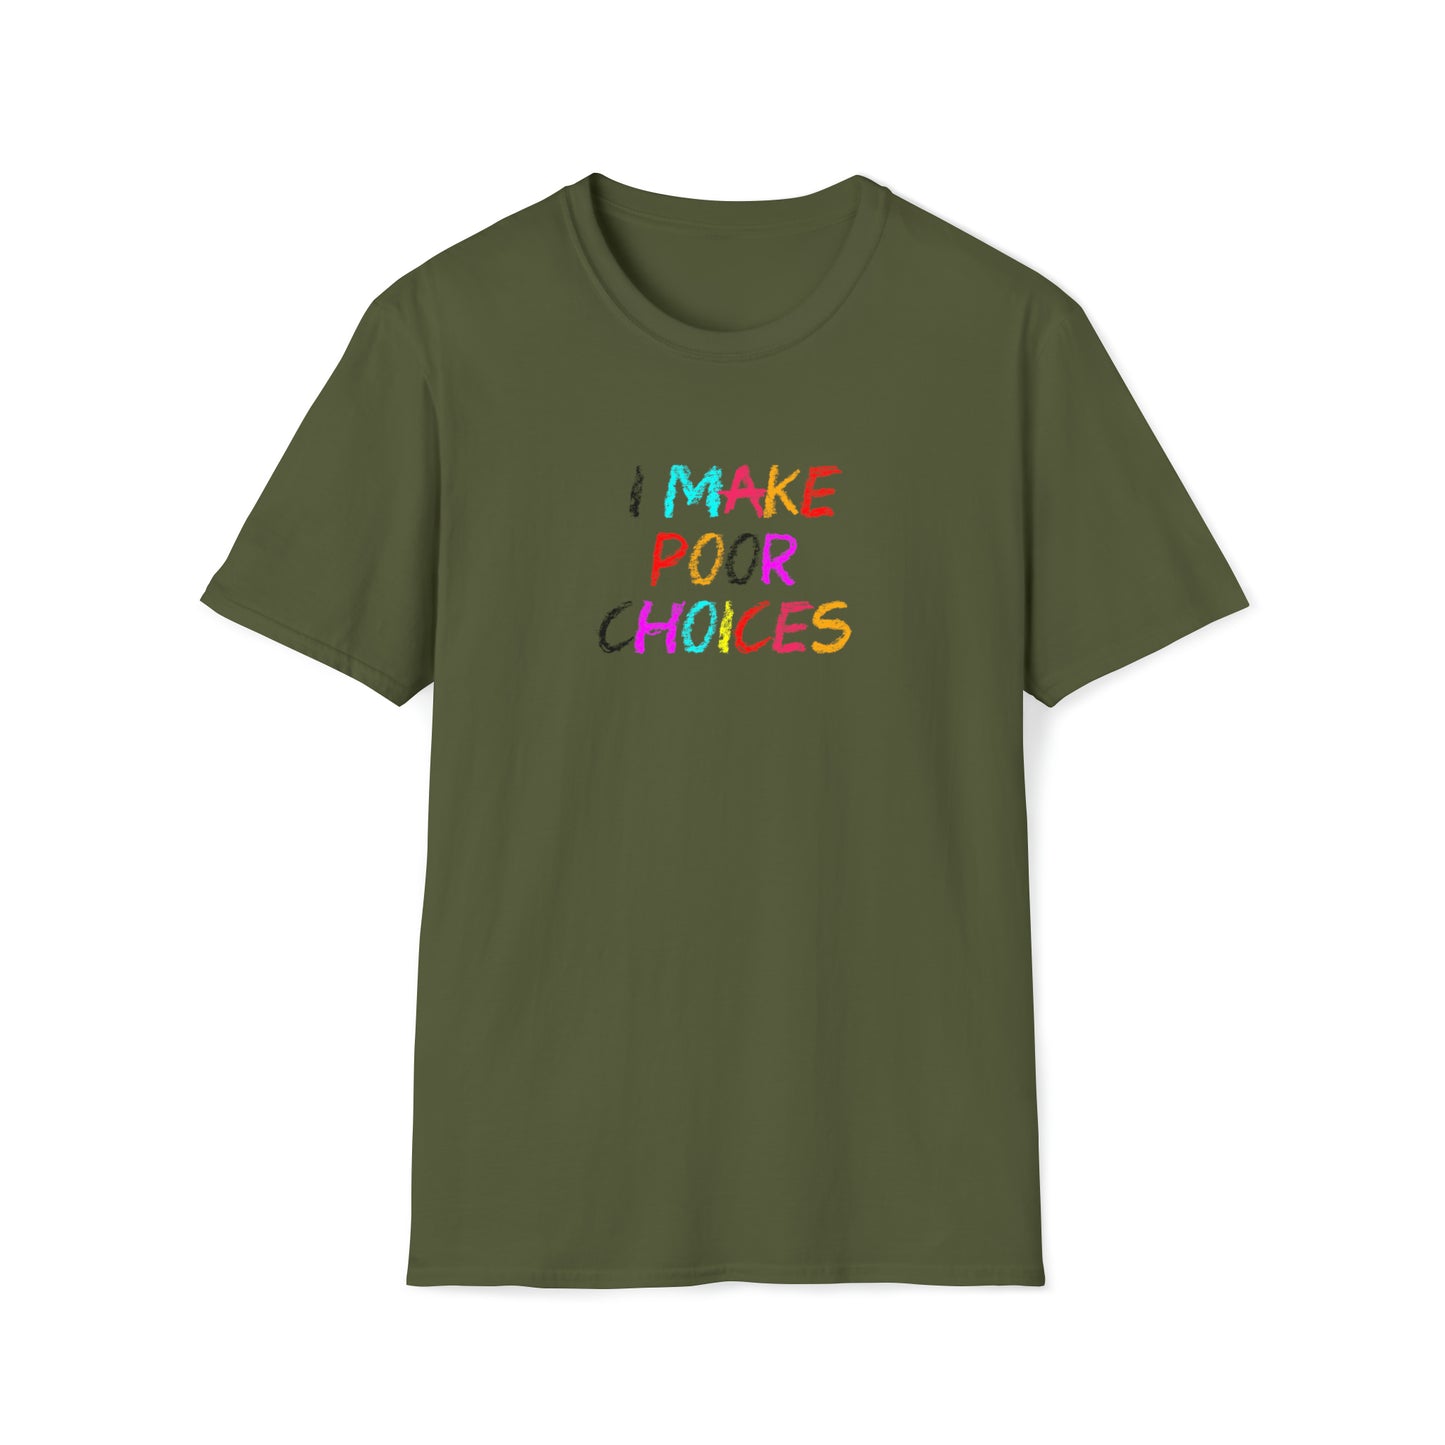 I Make Poor Choices - T-Shirt